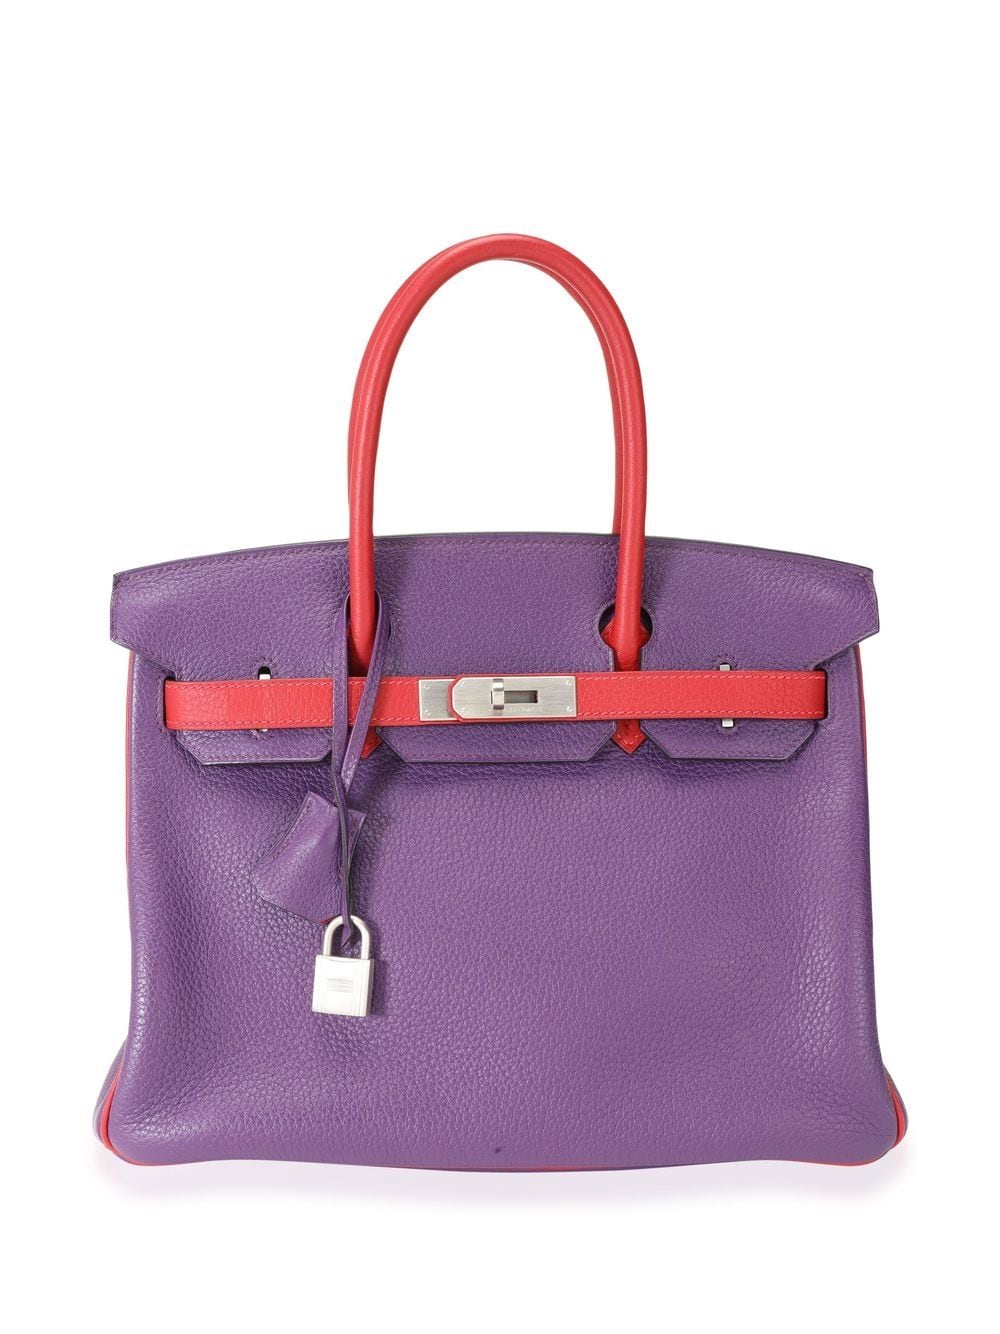 Hermès 2013 Birkin 30 Handbag